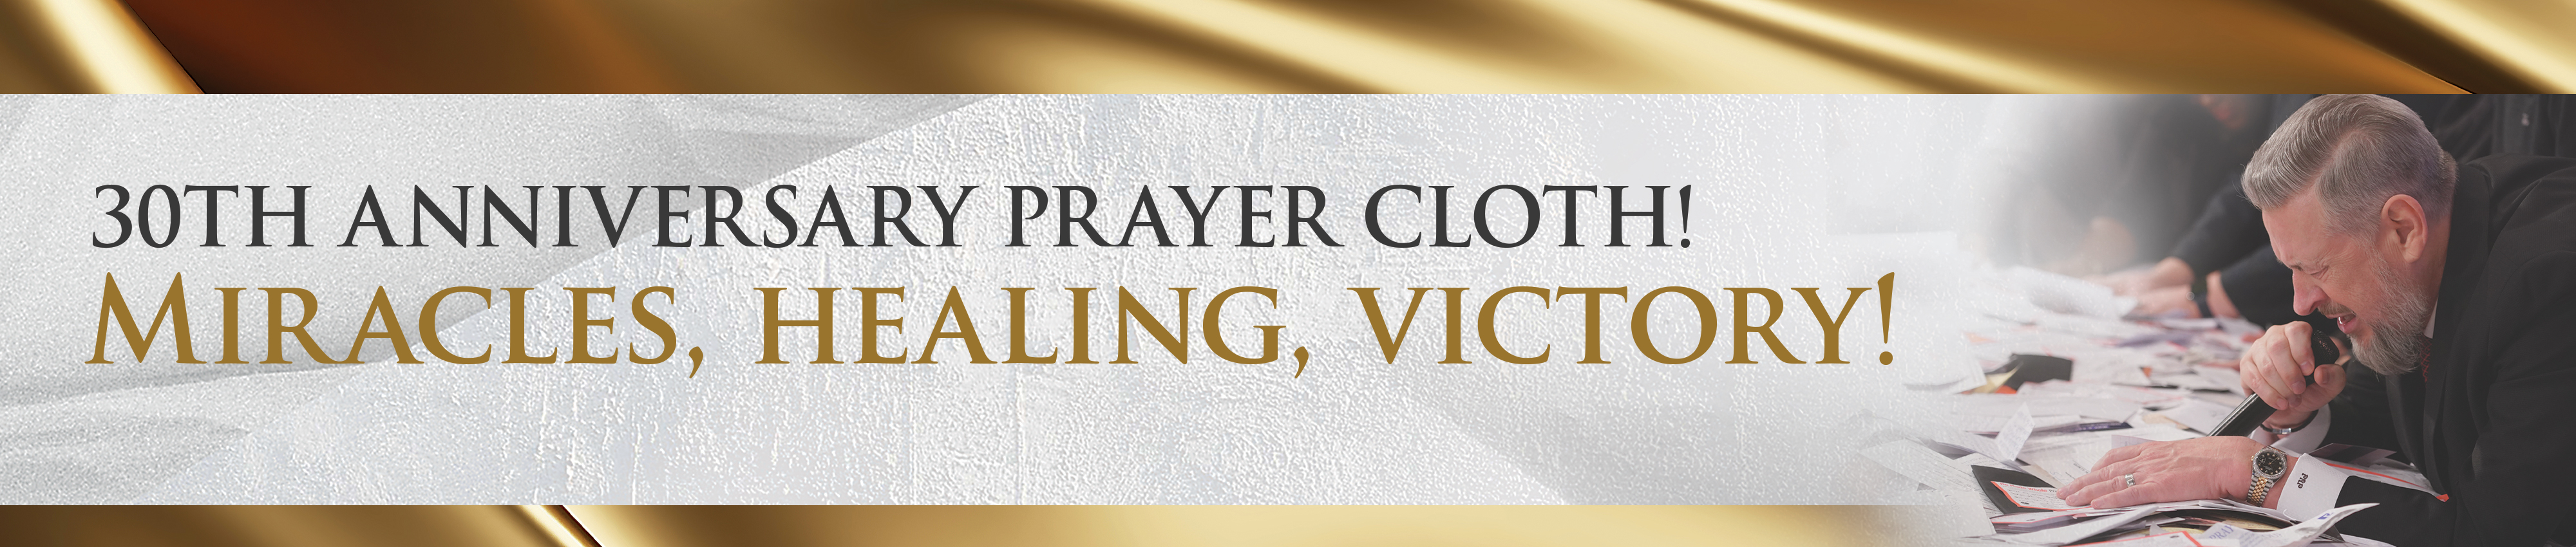 30th Anniversary Prayer Cloth! Miracles, Healing, Victory!